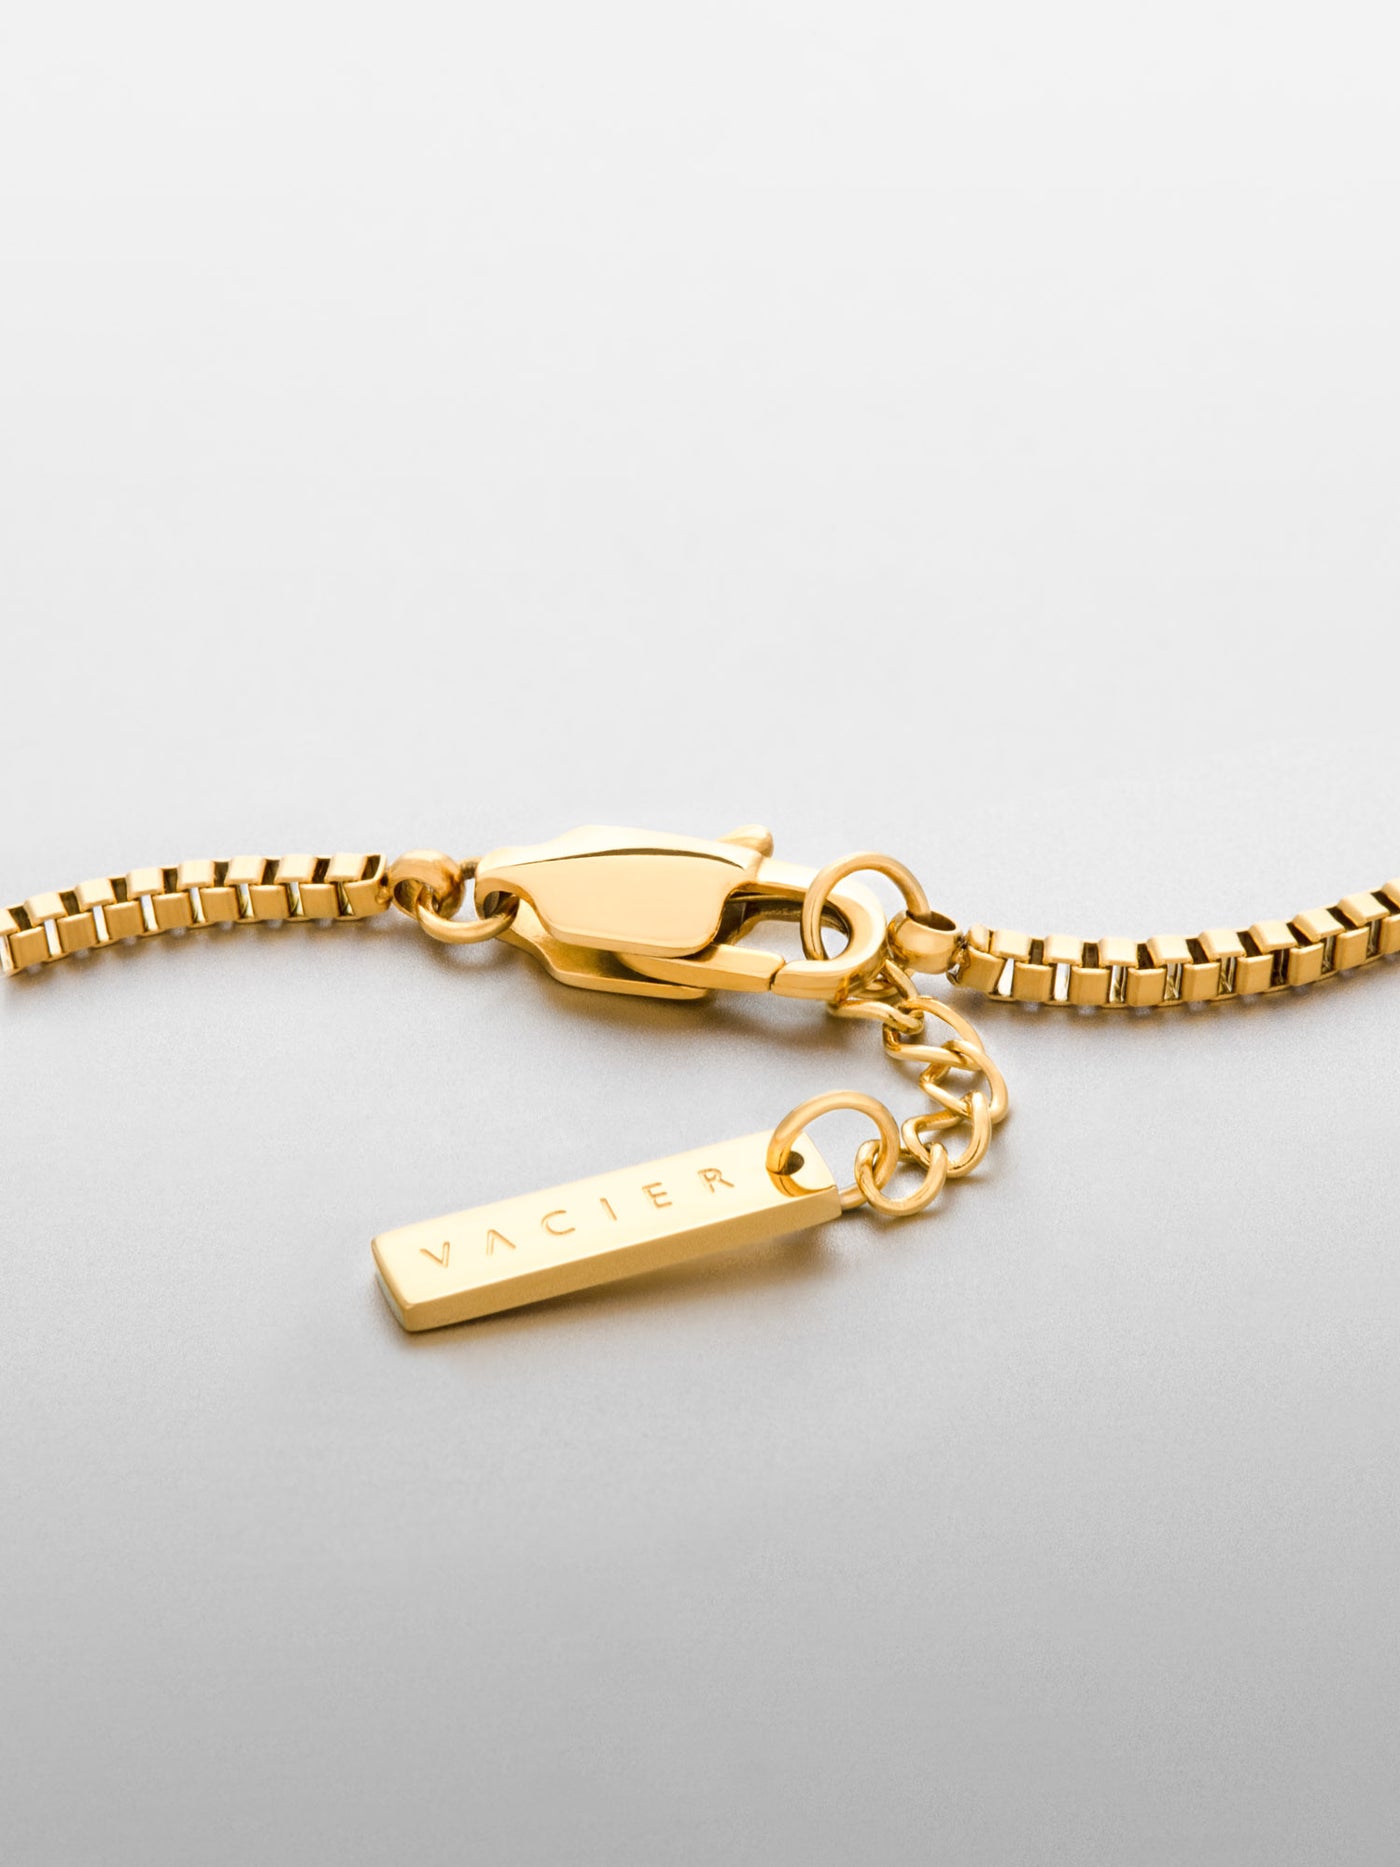 Endearing Links Gold Name Bracelet2